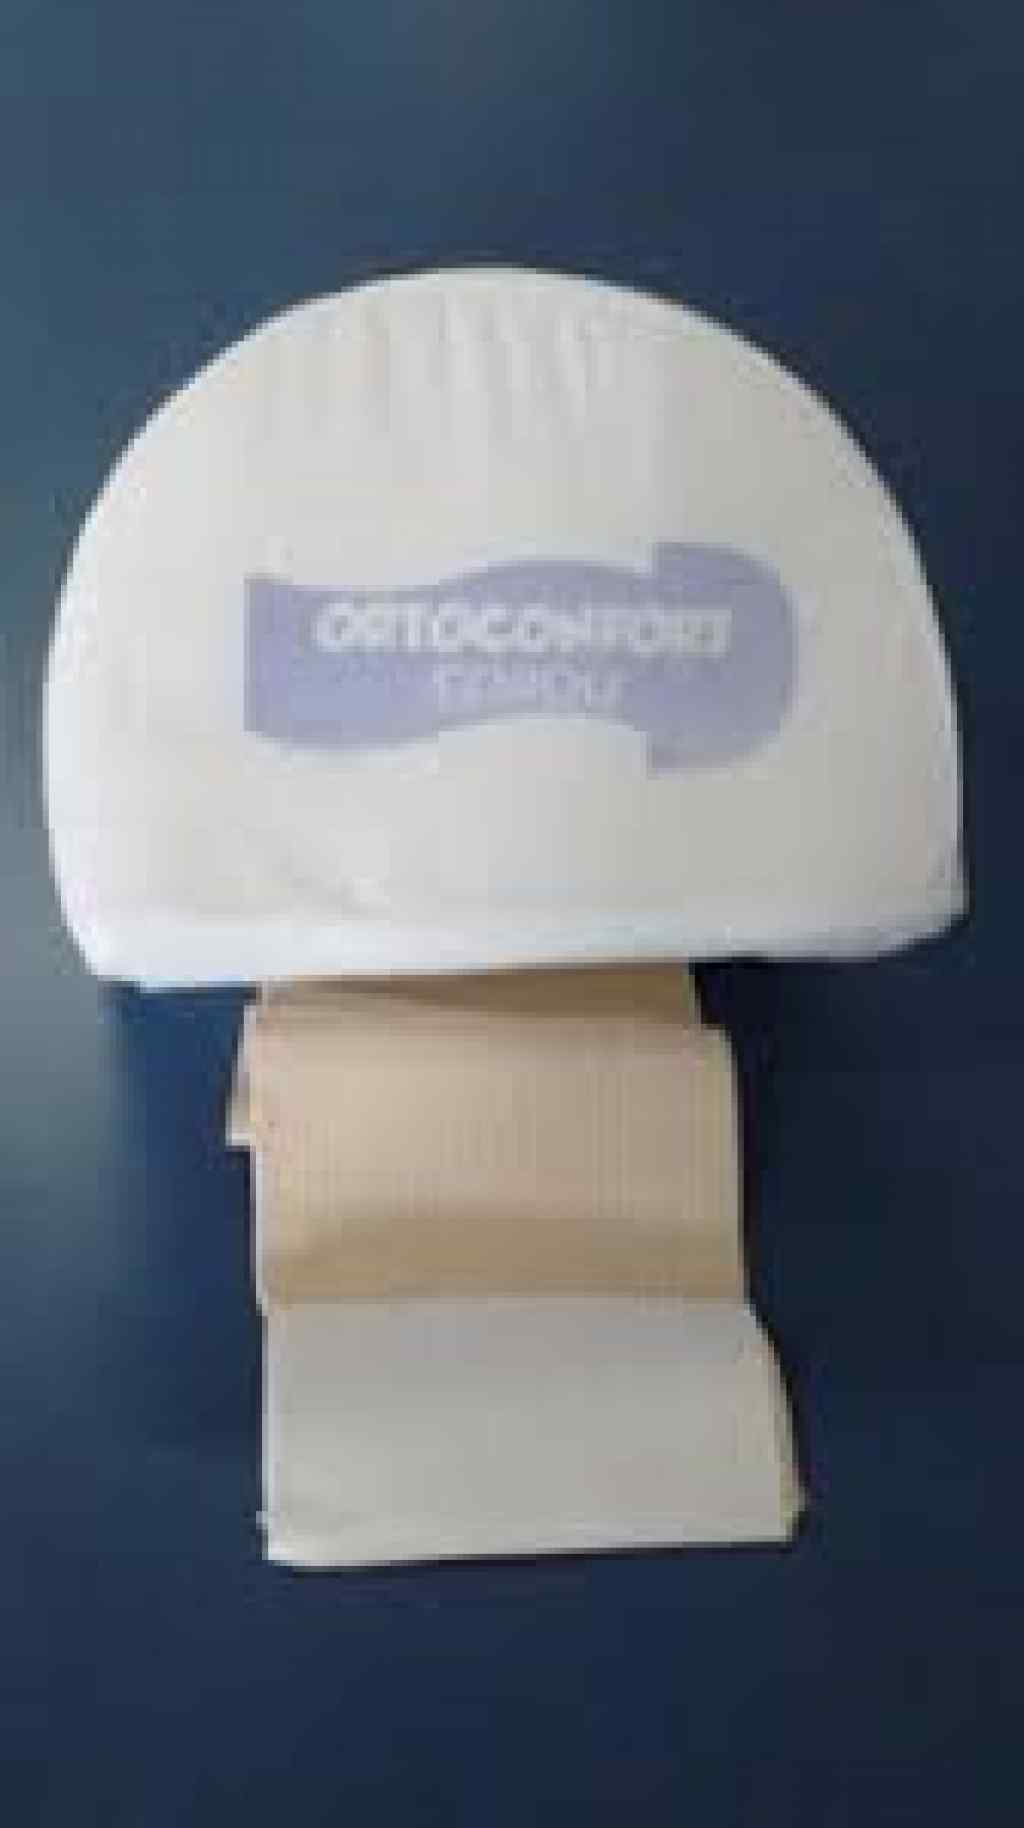 Amparar BH - Apoio anatômico para joelho ortoconfort - m - 